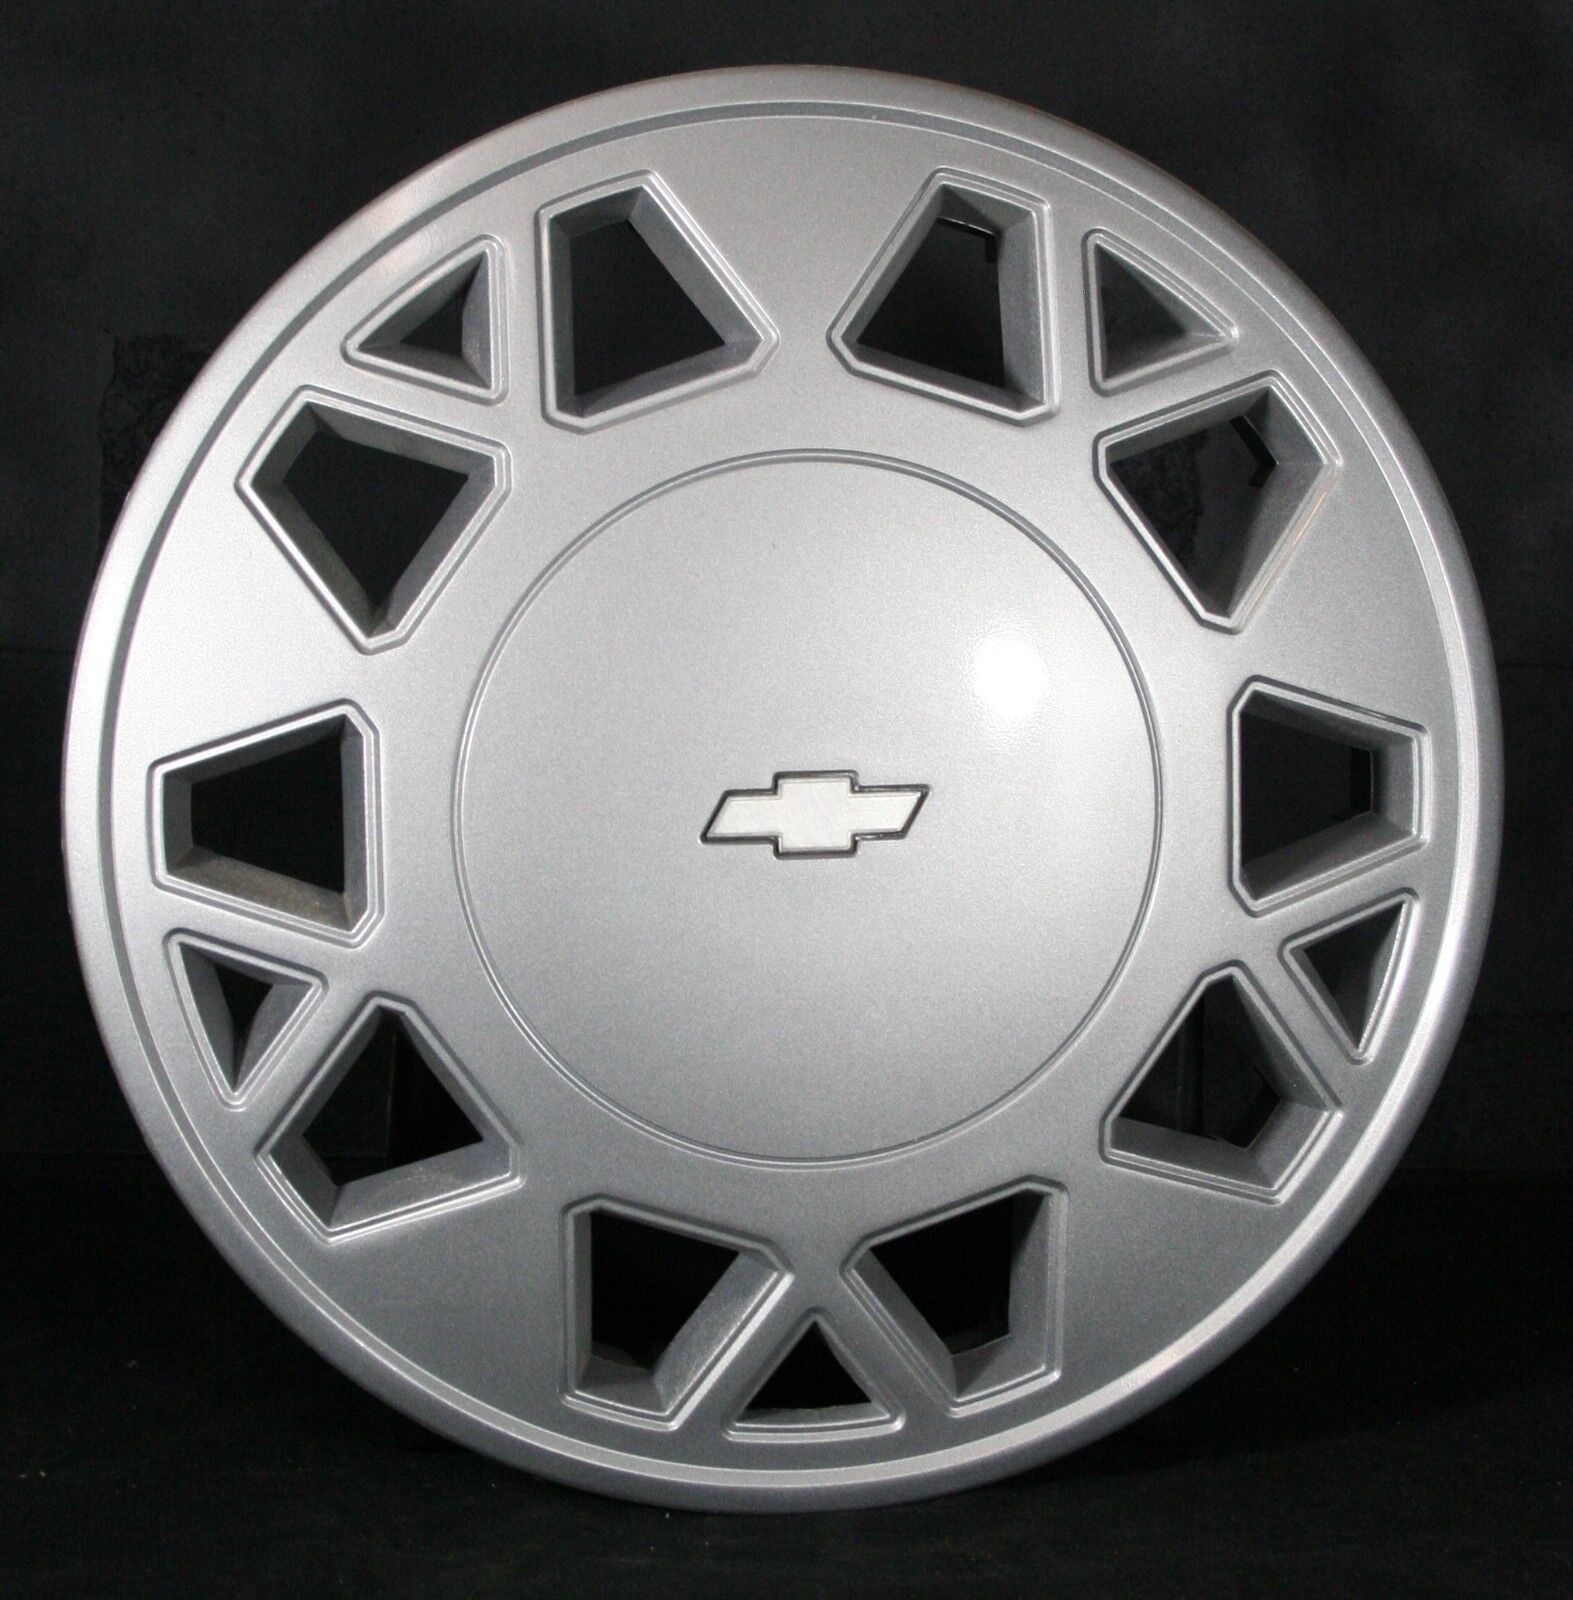 1982-1989 Chevrolet Celebrity, Corsica wheel cover, OEM # 14041916, H # 3149